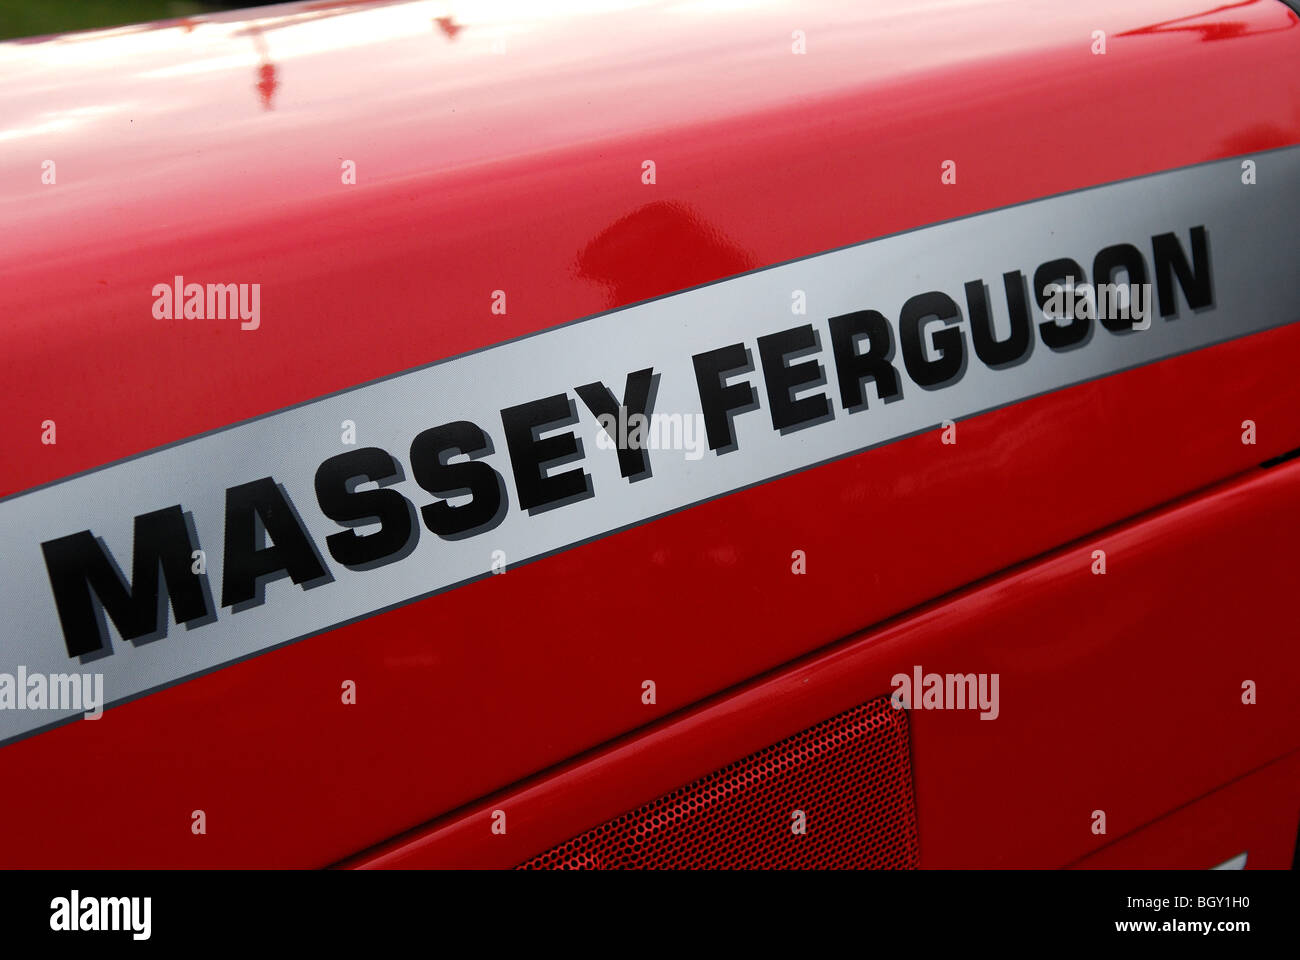 Massey Ferguson Tractor. Stock Photo